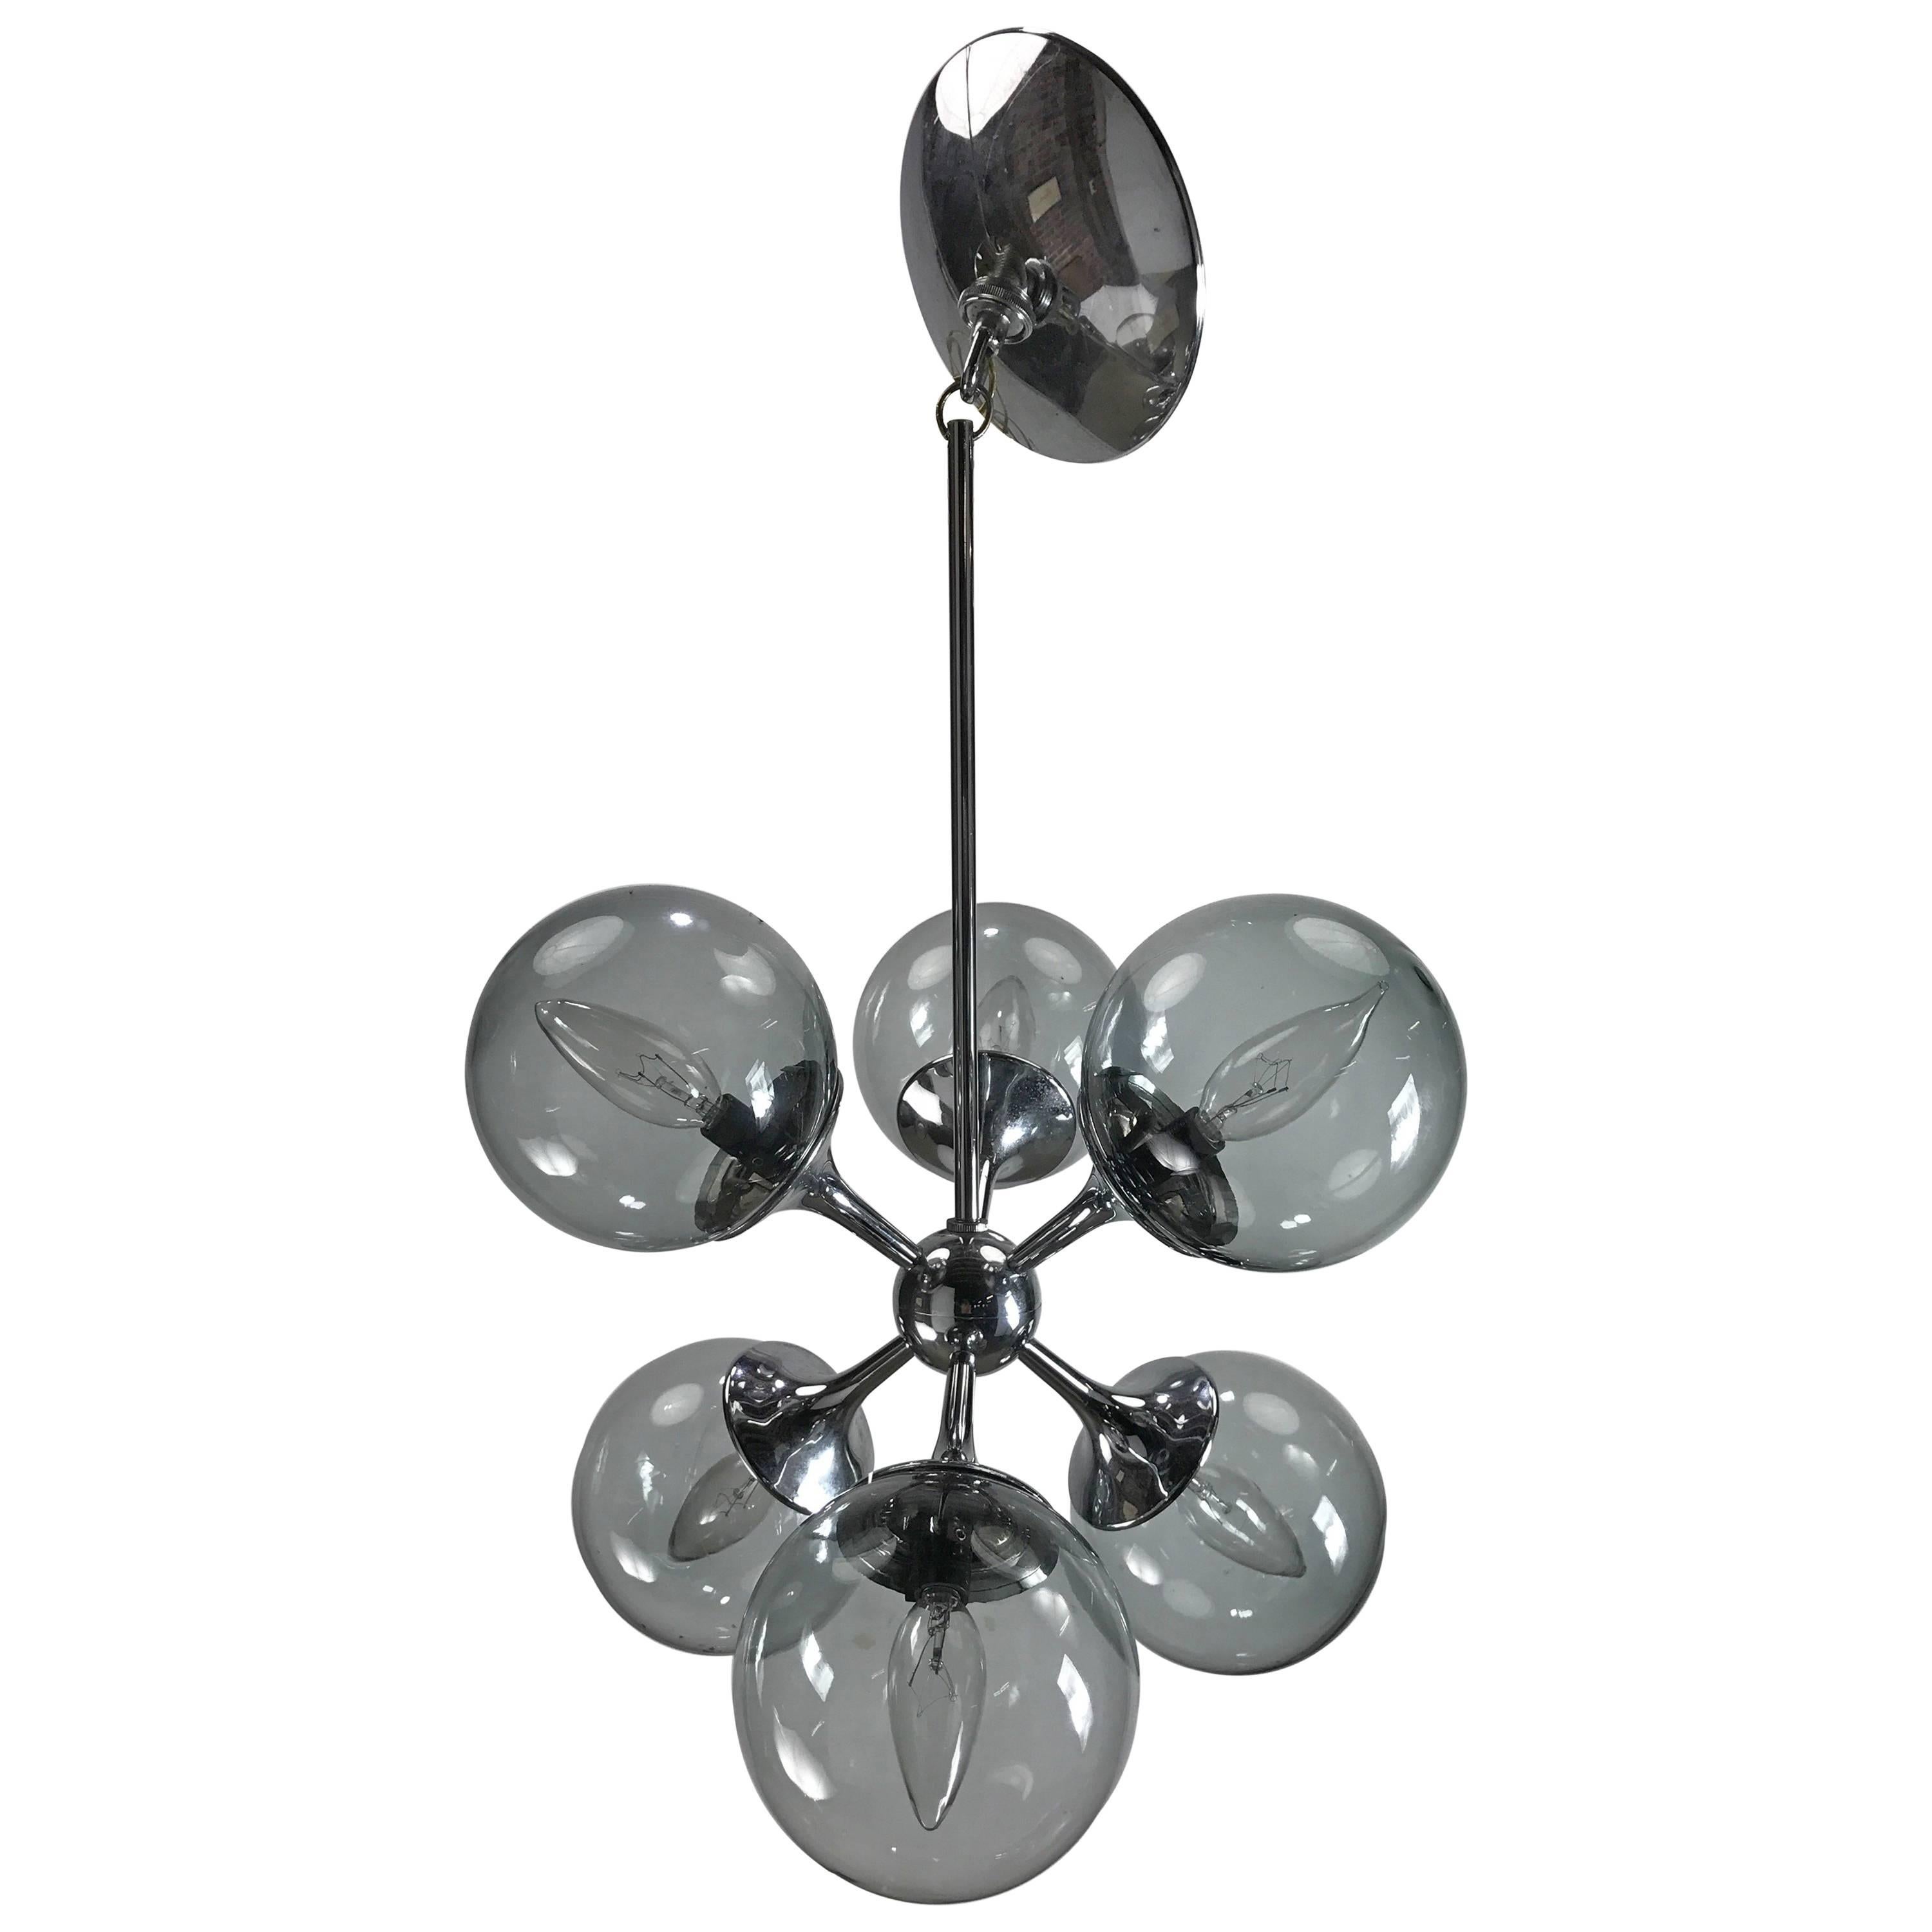 Classic Lightolier Sputnik Pendant Light Fixture, Smoke Glass Globes